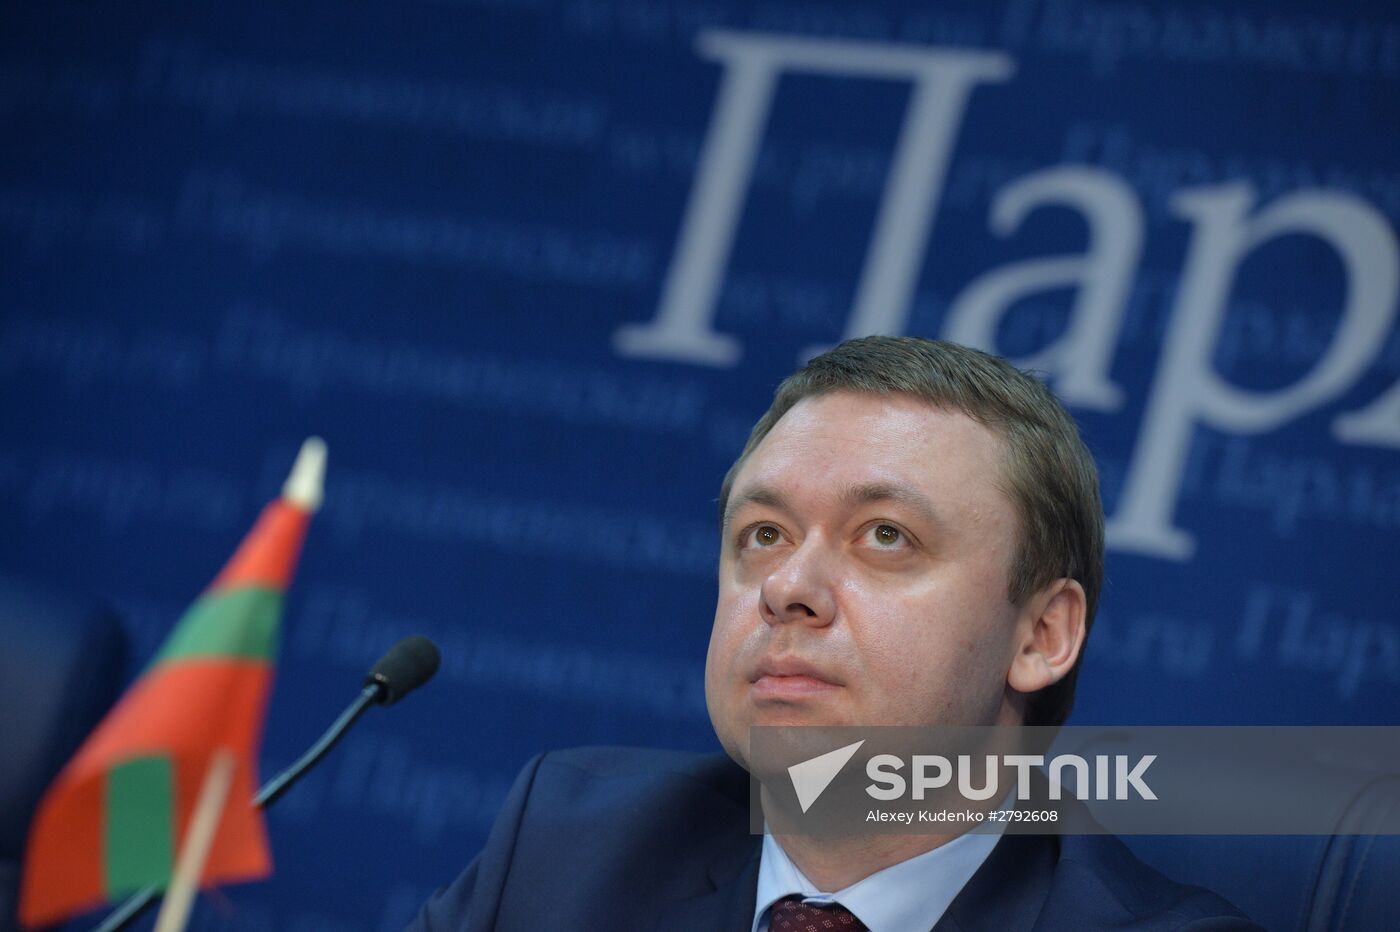 News conference "Transnistria: how to survive under economic blockade?"